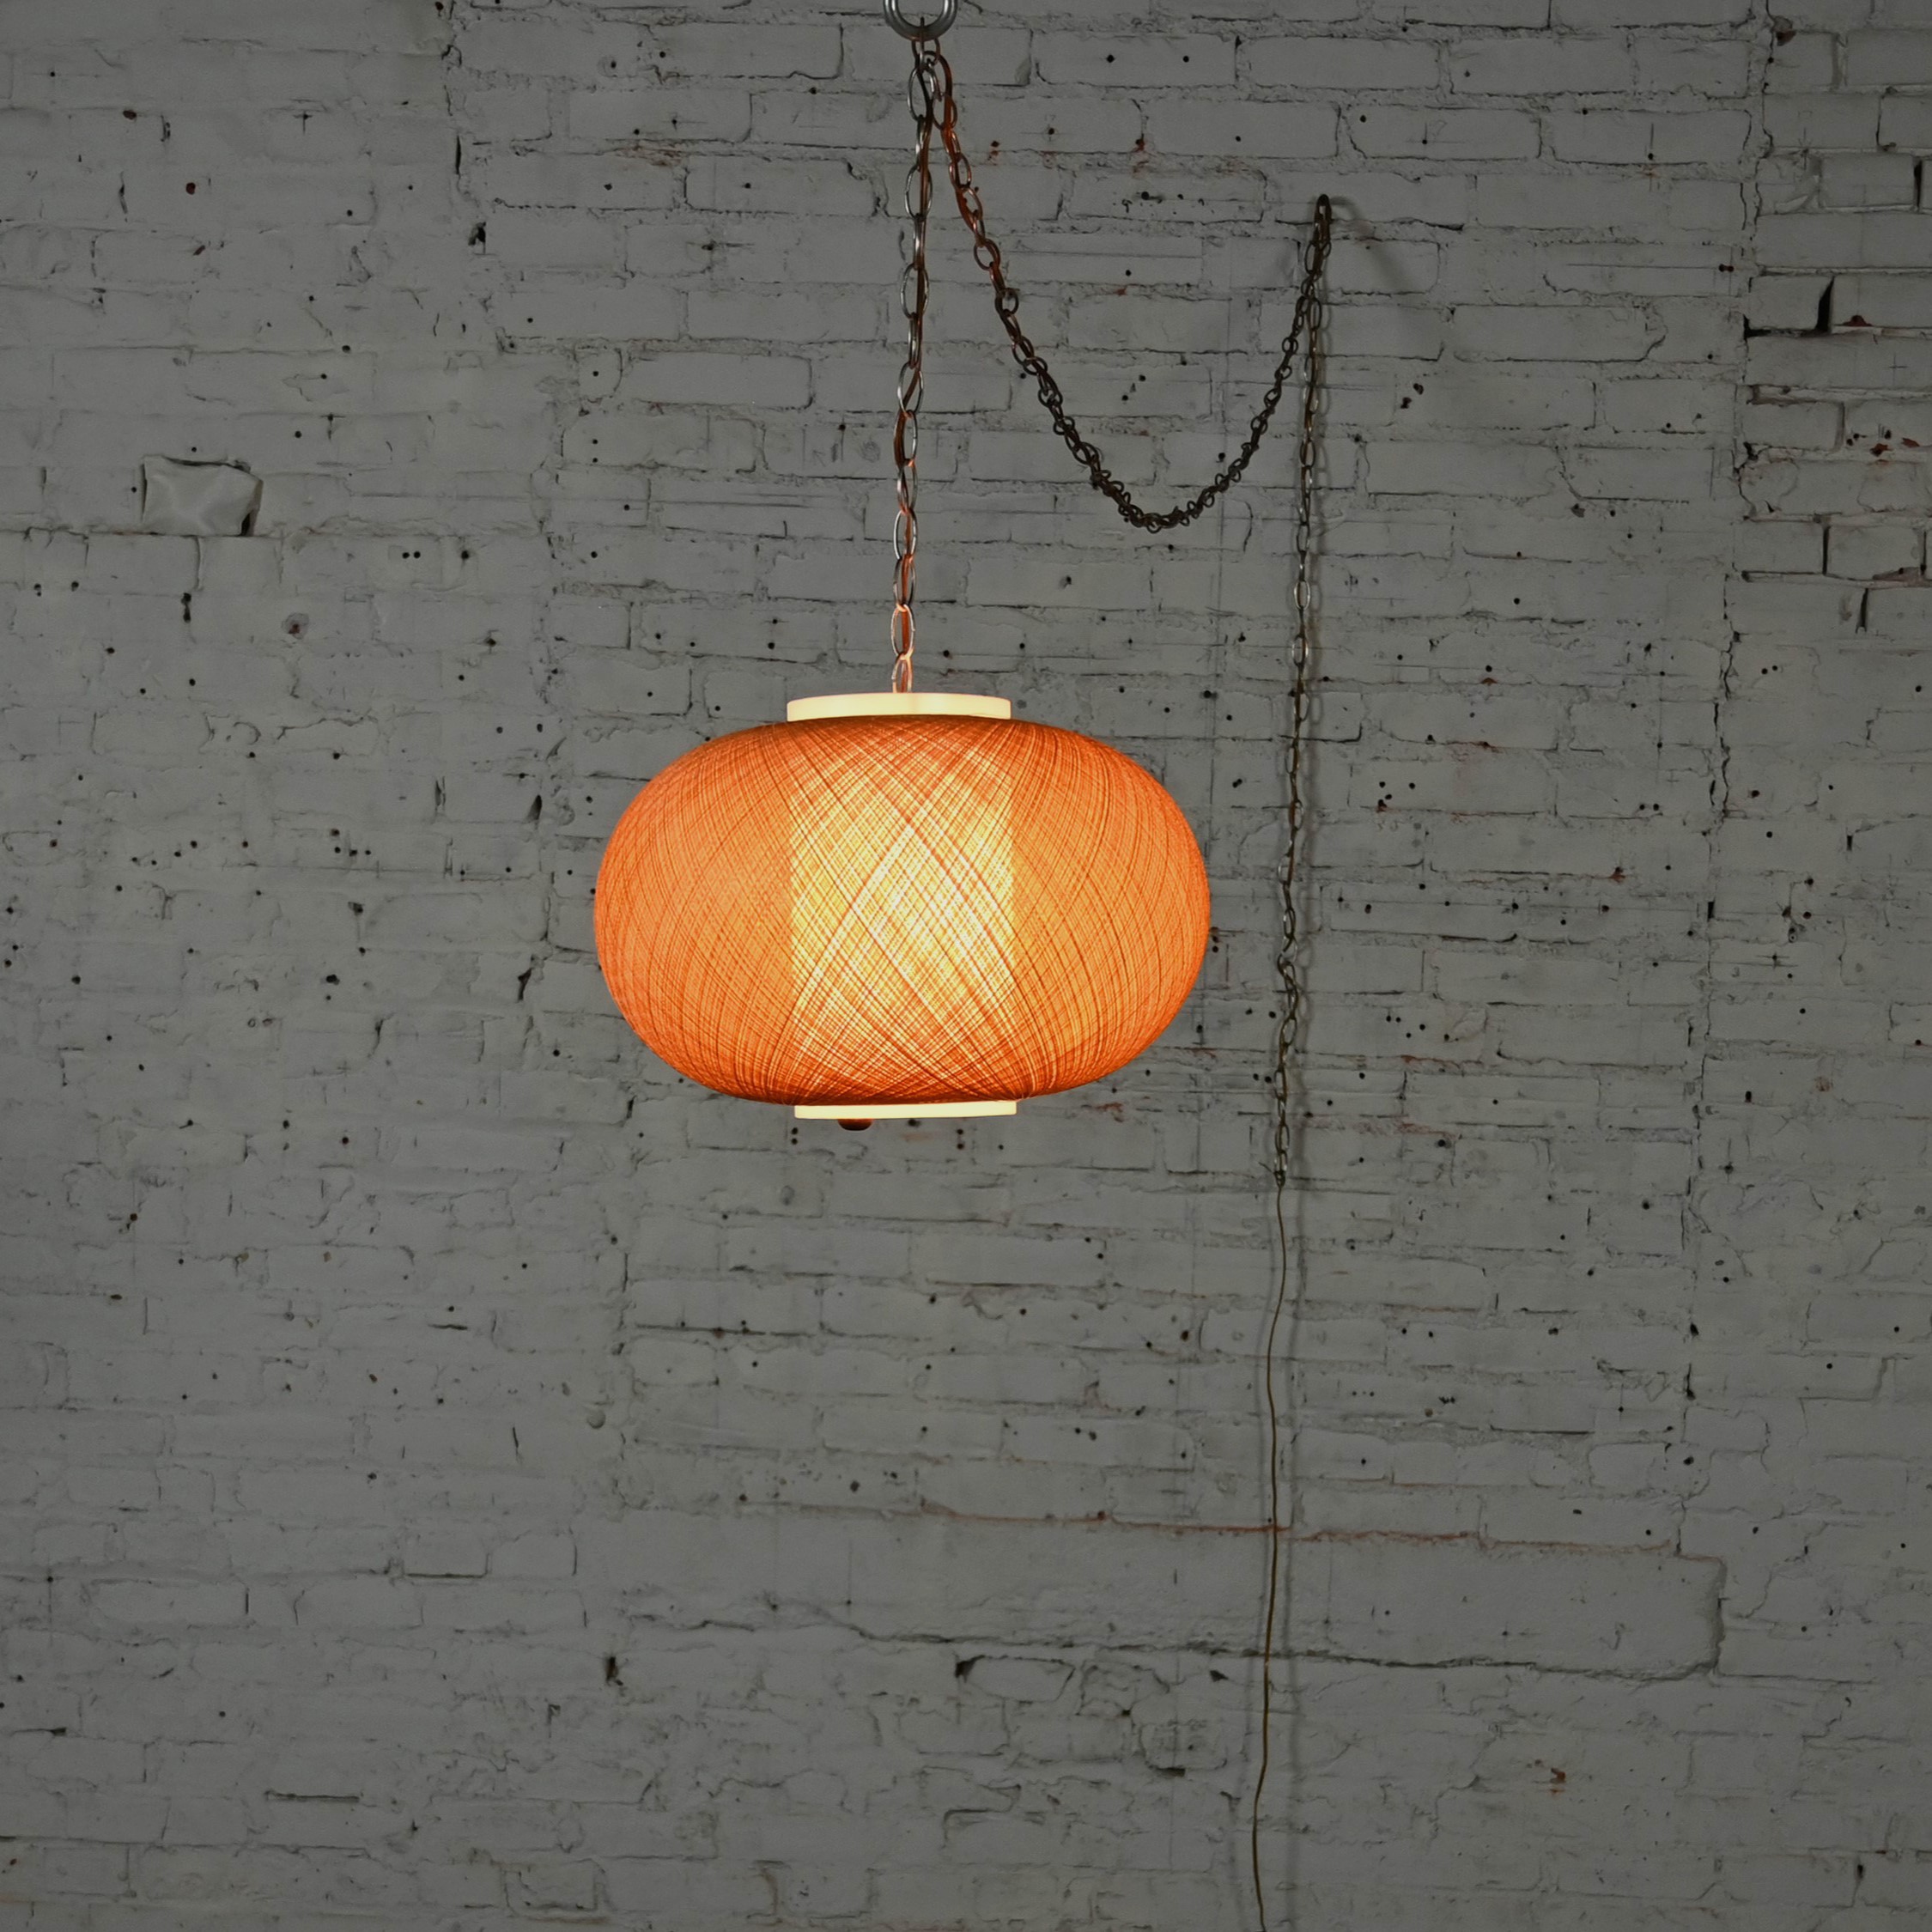 Mid-20th Century MCM Gold Spun Fiberglass String Swag Pendant Hanging Light Fixture or Lamp